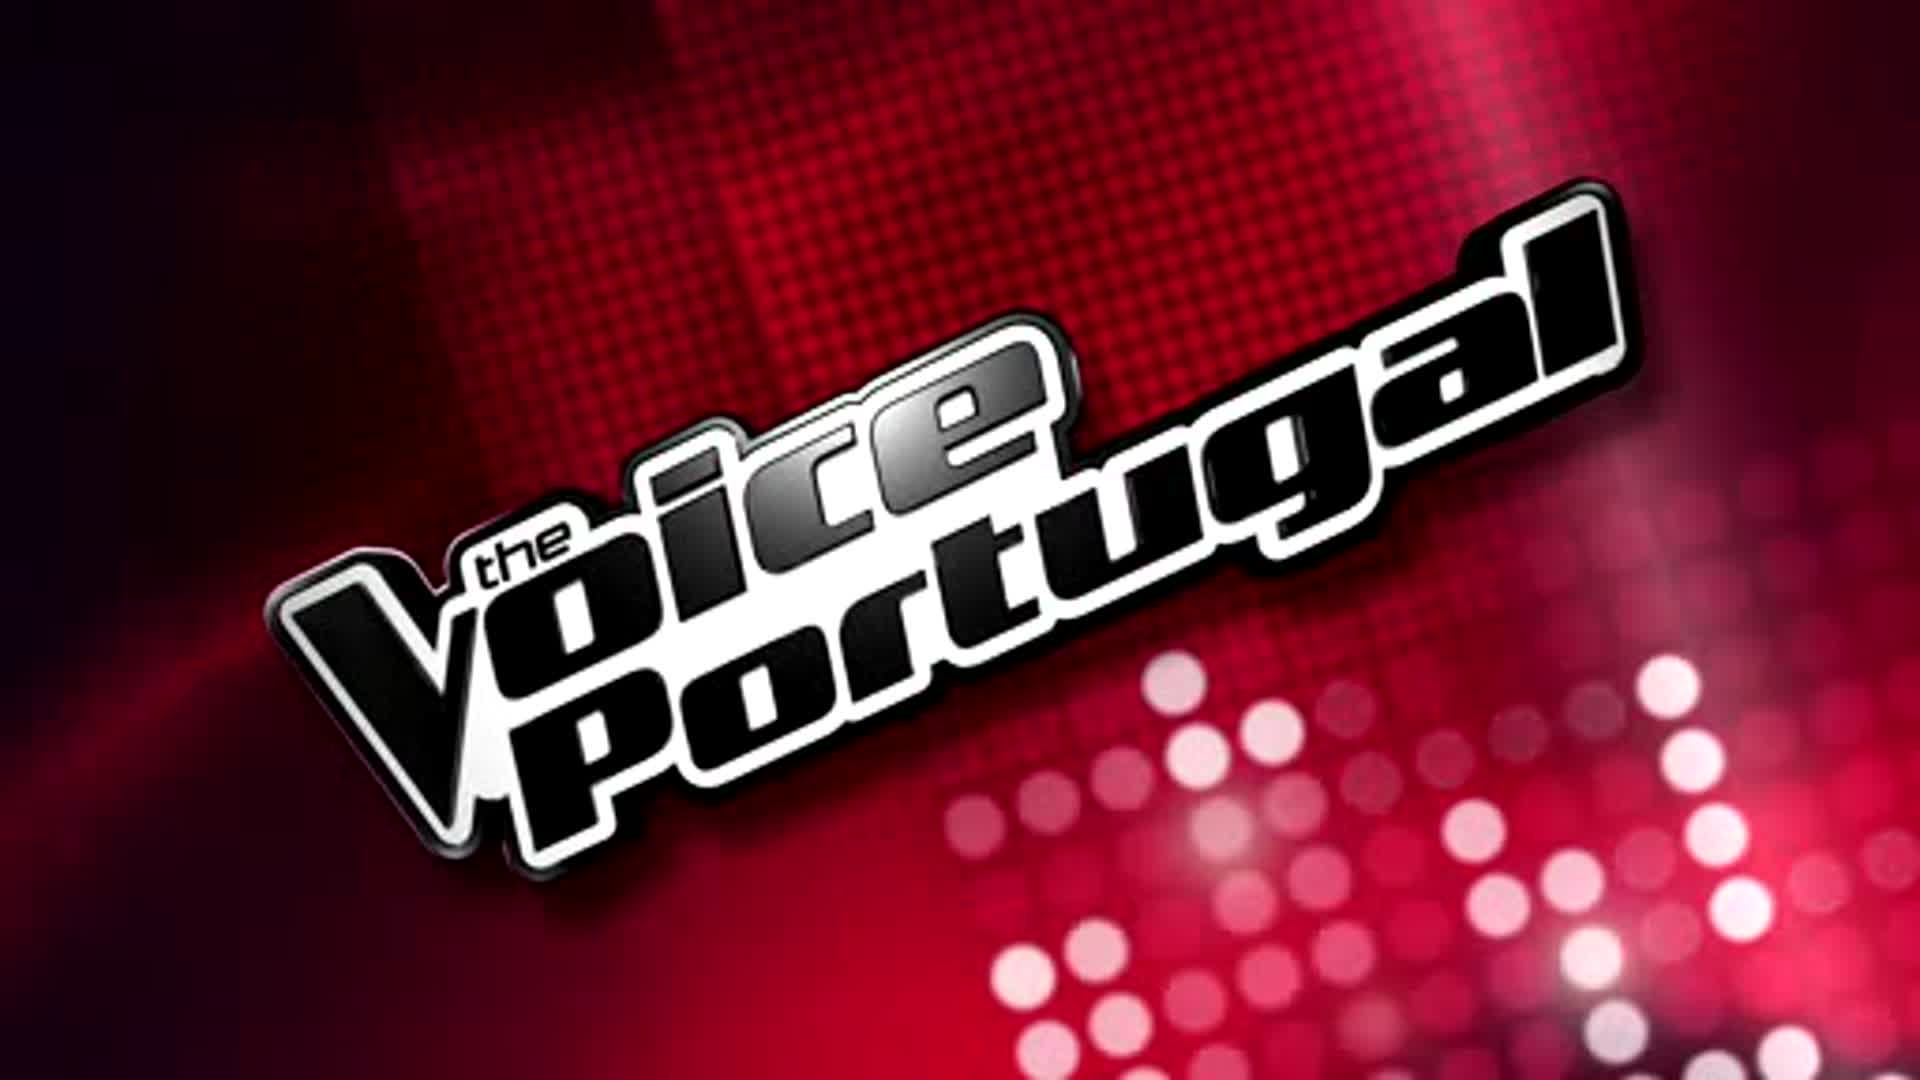 E07B23D2D11545758649C53B0502C3231 8 Vêm Aí As Galas Em Direto Do «The Voice Portugal»